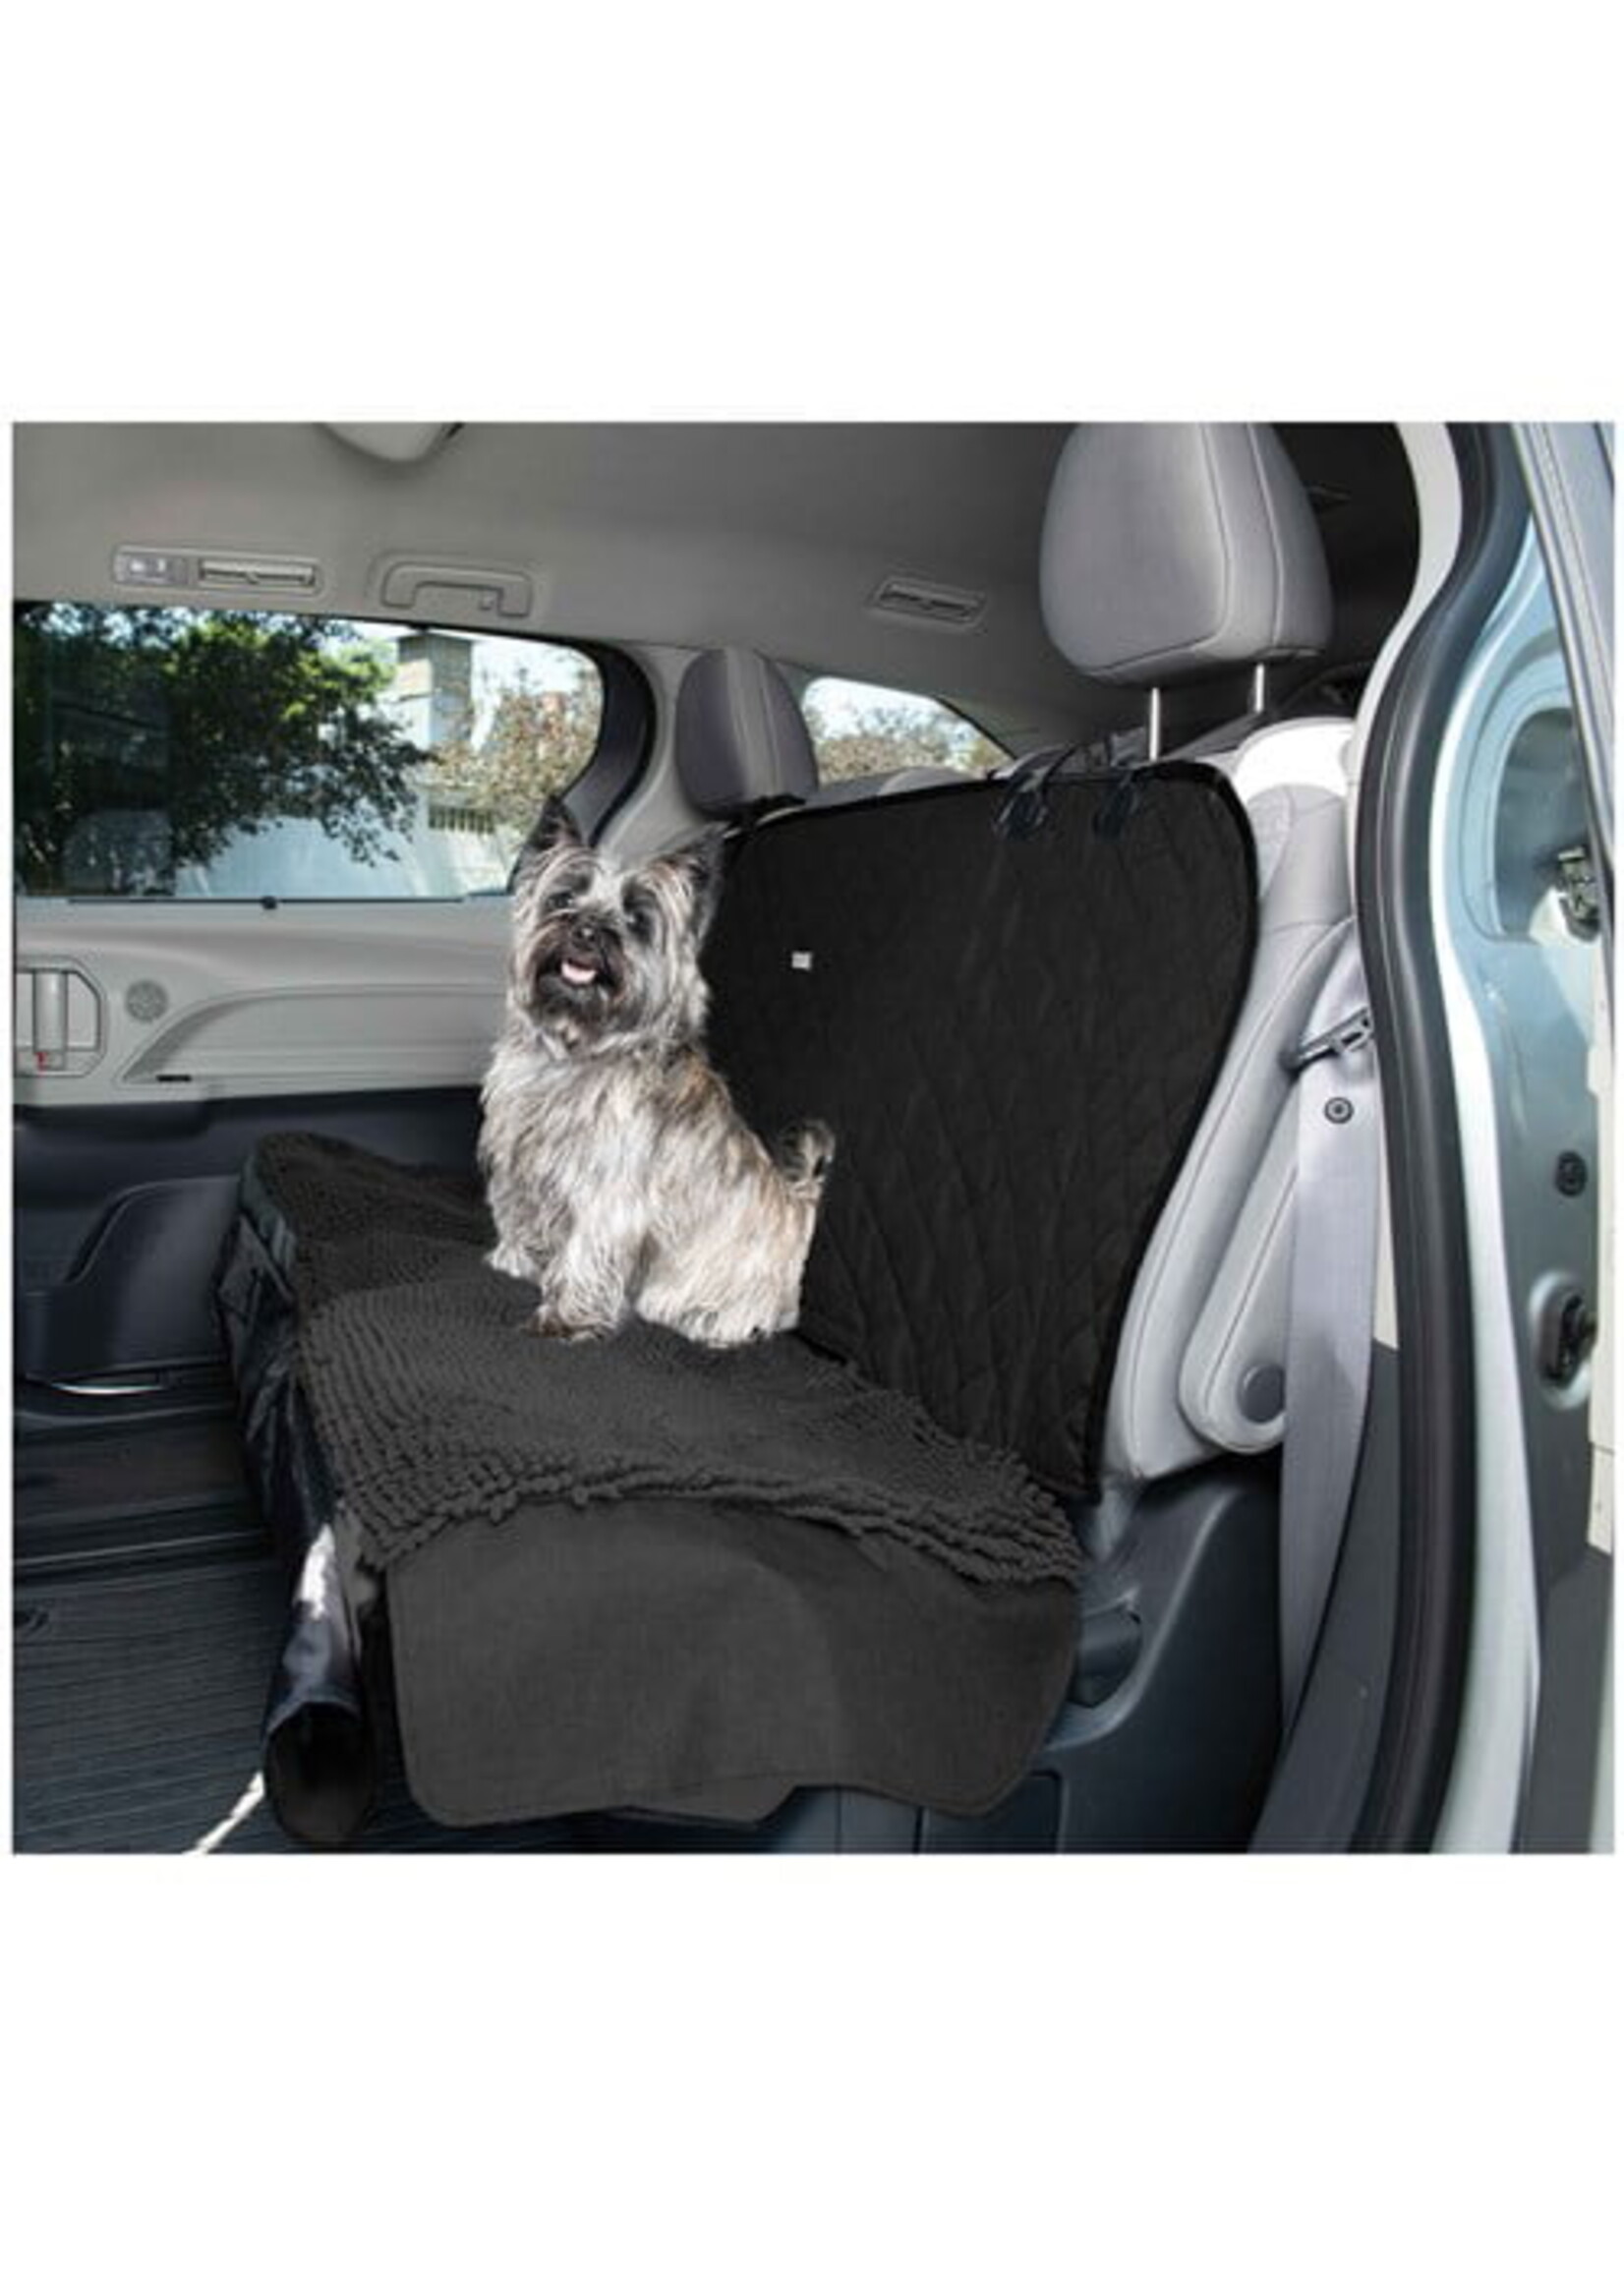 Dog Gone Smart Dog Gone Smart Dirty Dog 3 in 1 Car Seat Cover & Hammock